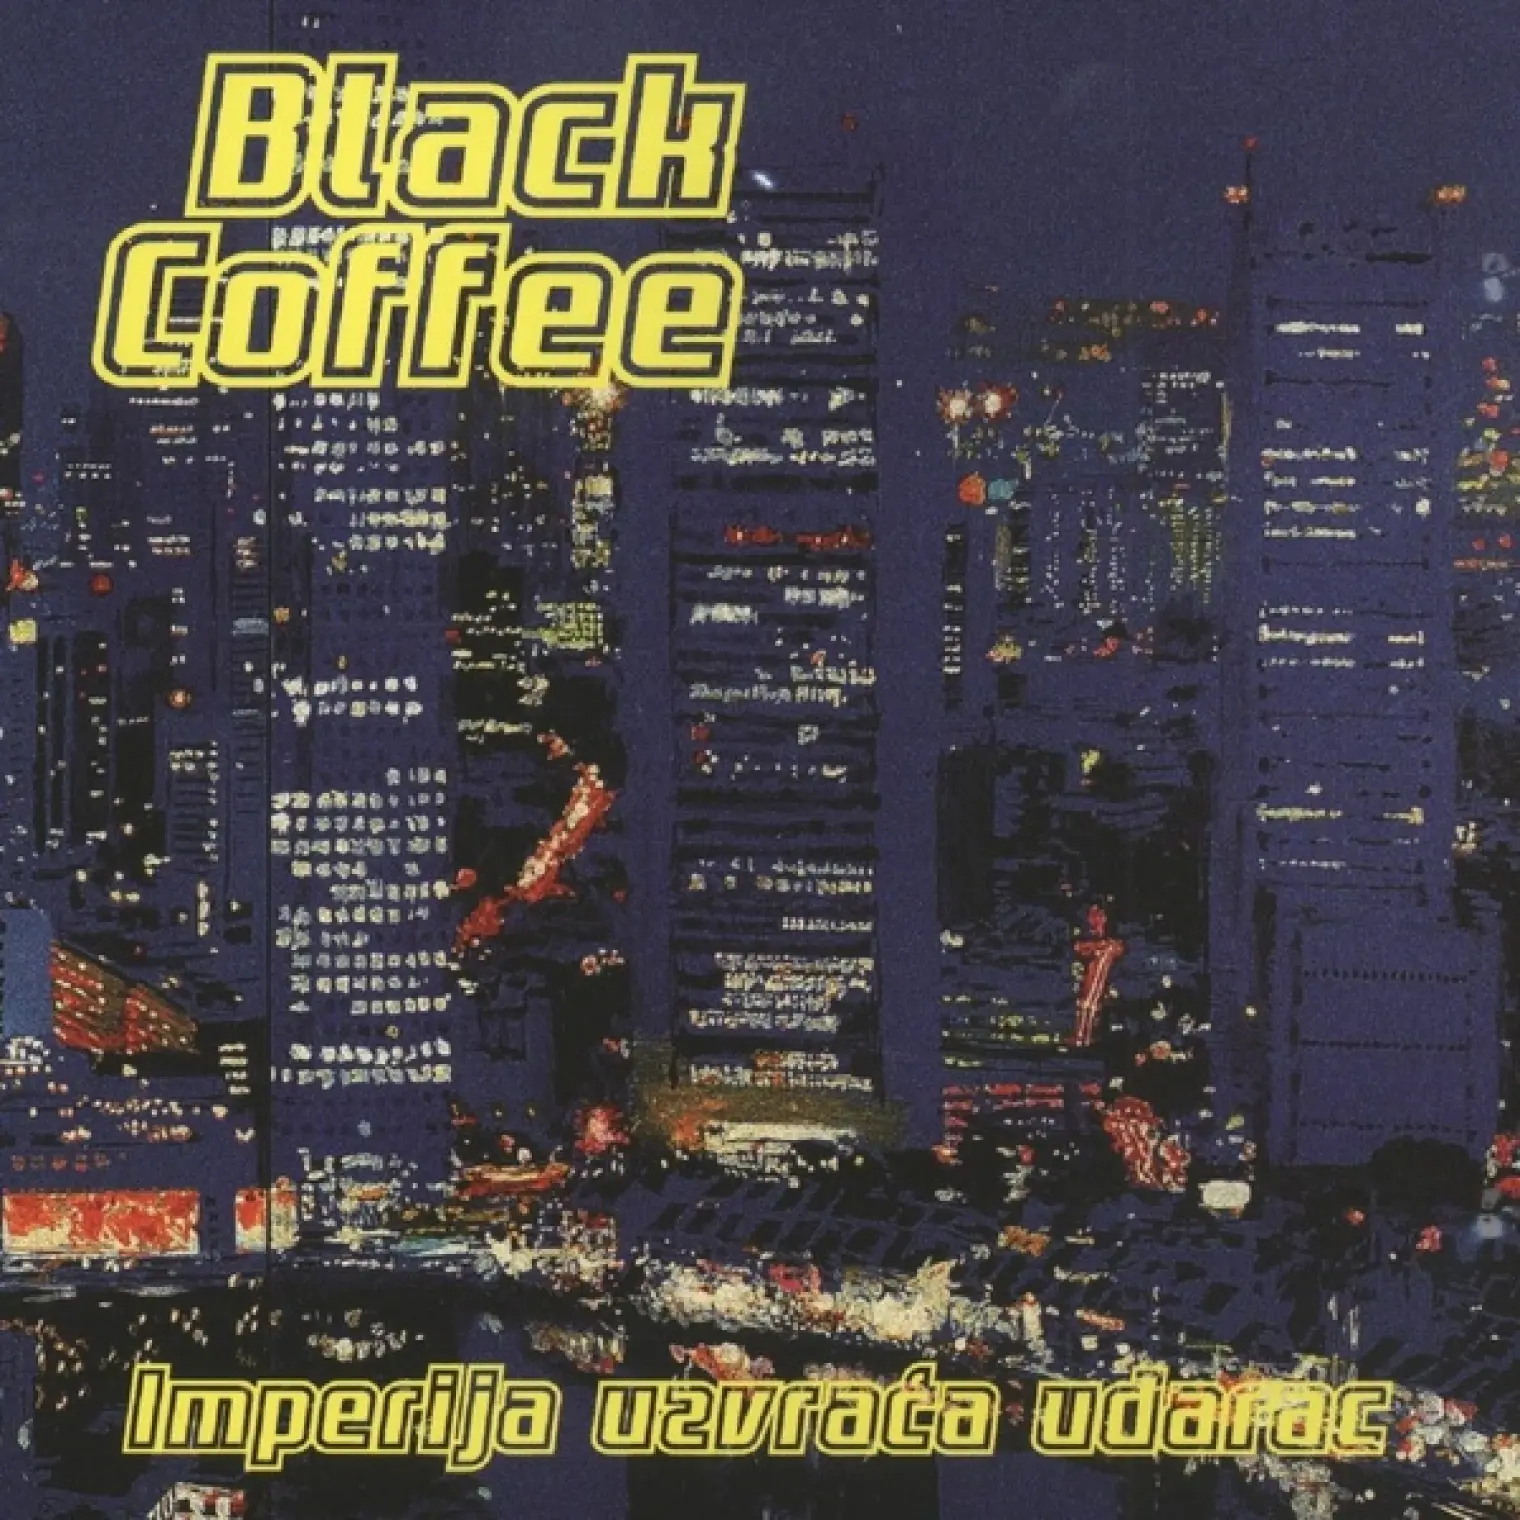 Imperija Uzvrača Udarac -  Black Coffee  